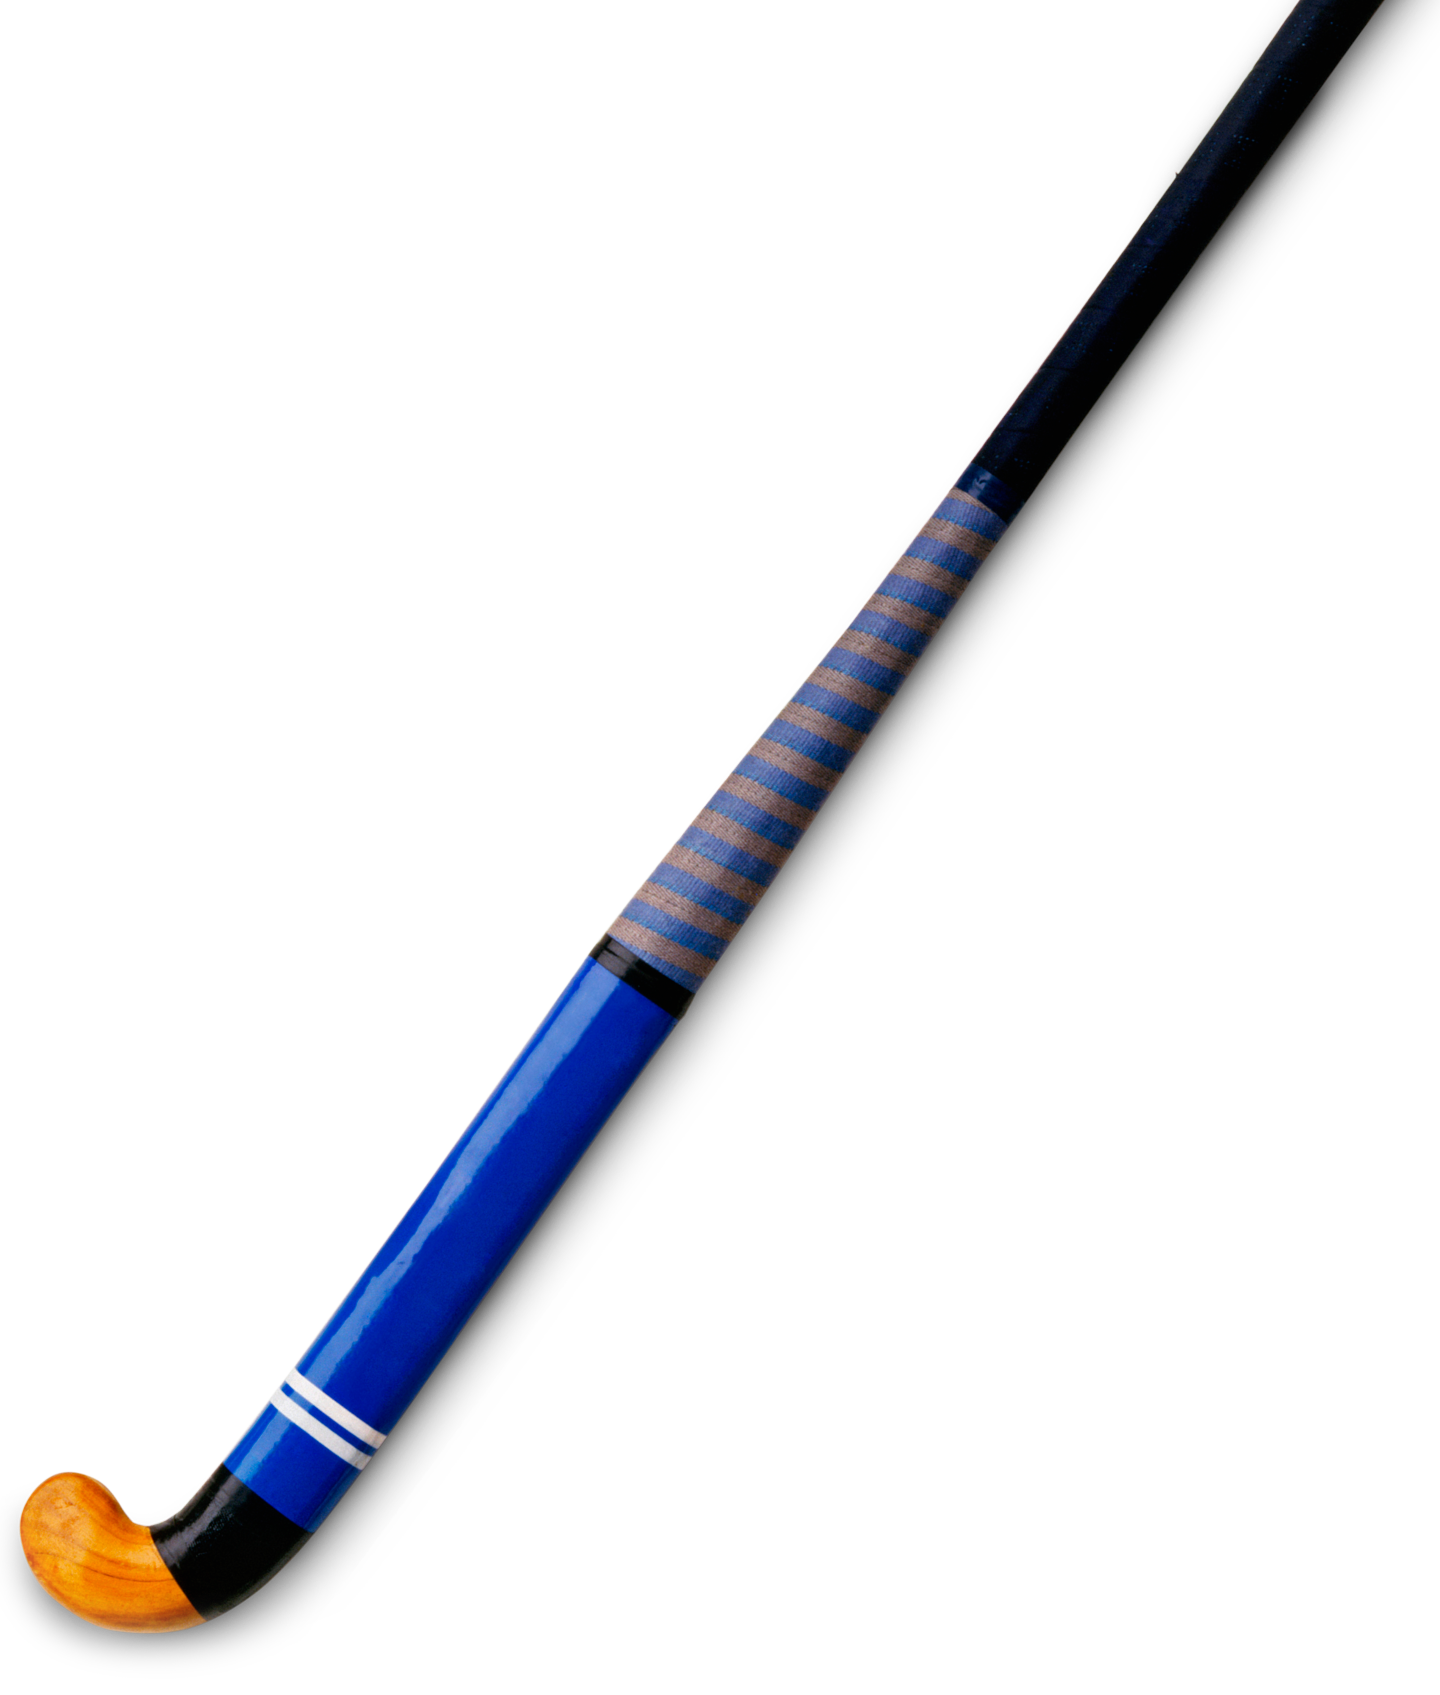 Blue Hockey Stick PNG Image